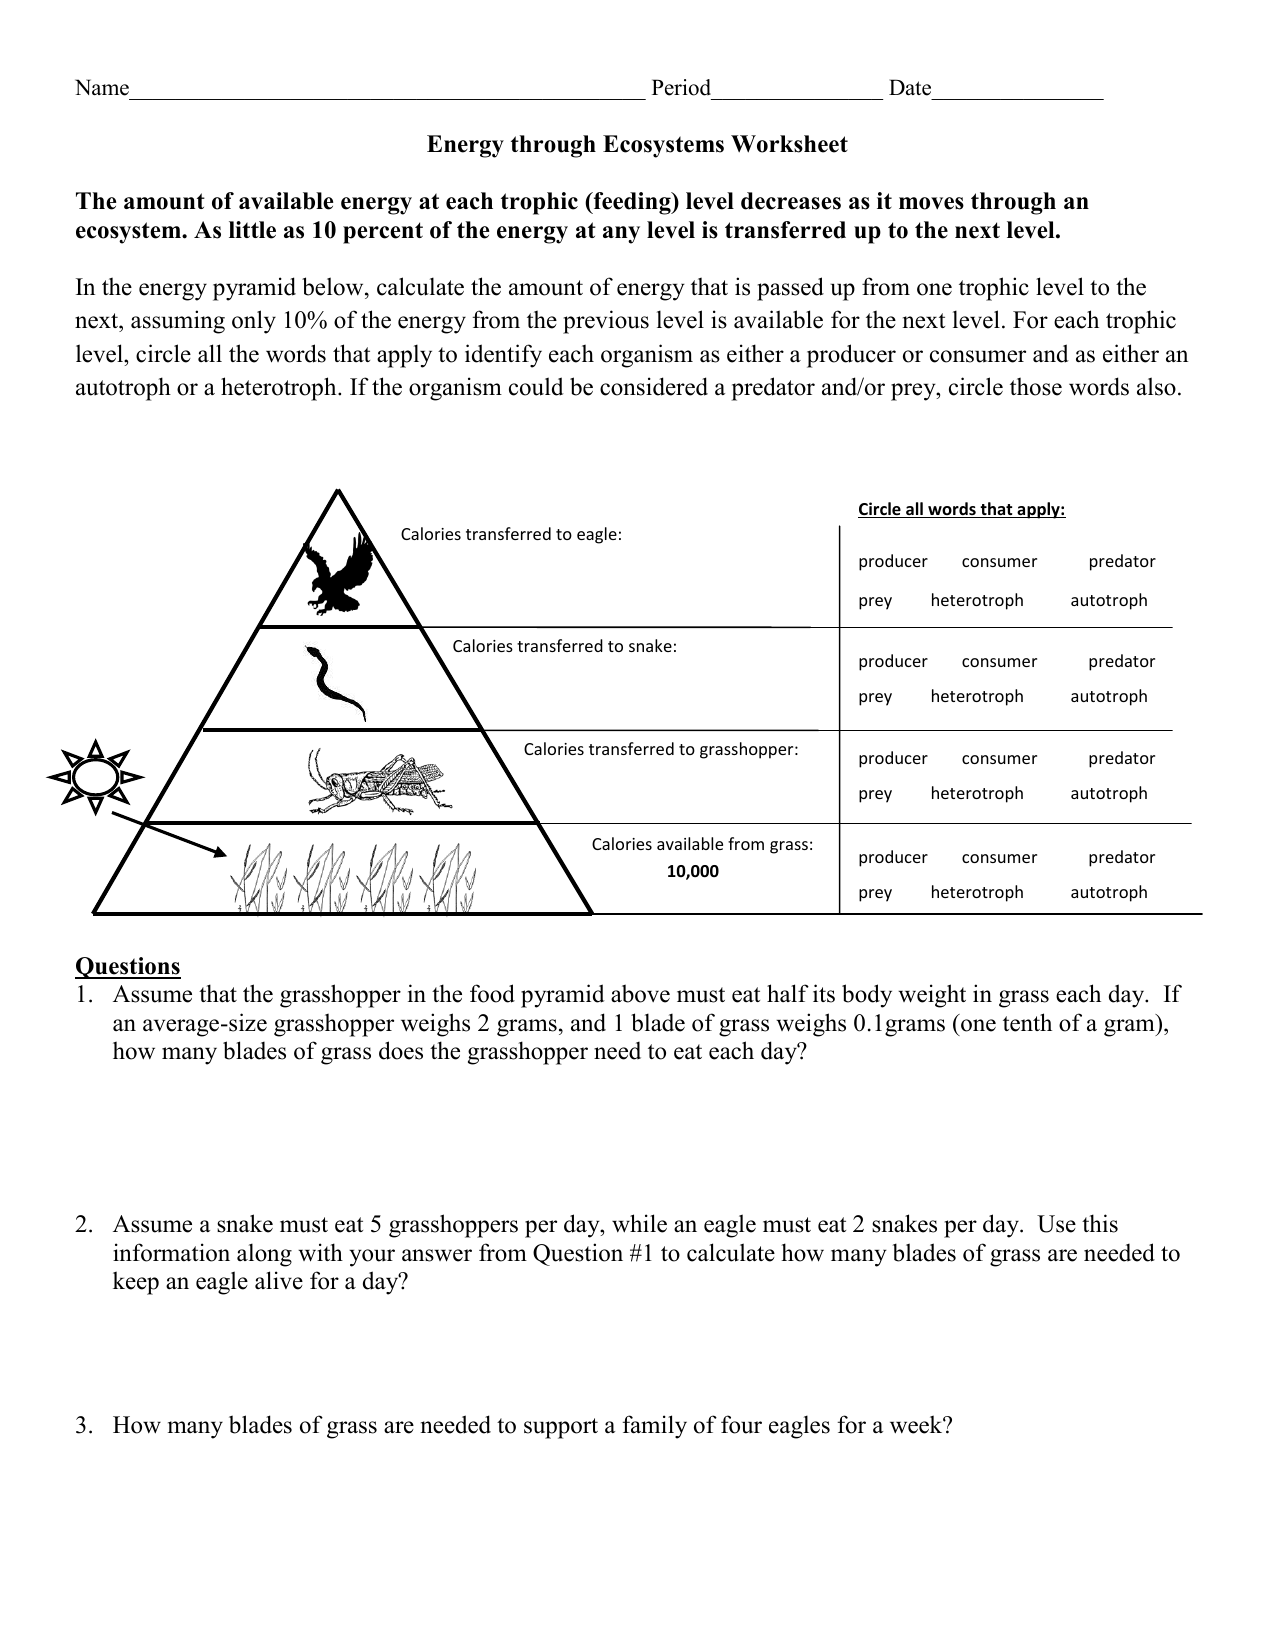 energy through an ecosystem worksheet Regarding Ecological Pyramids Worksheet Answers